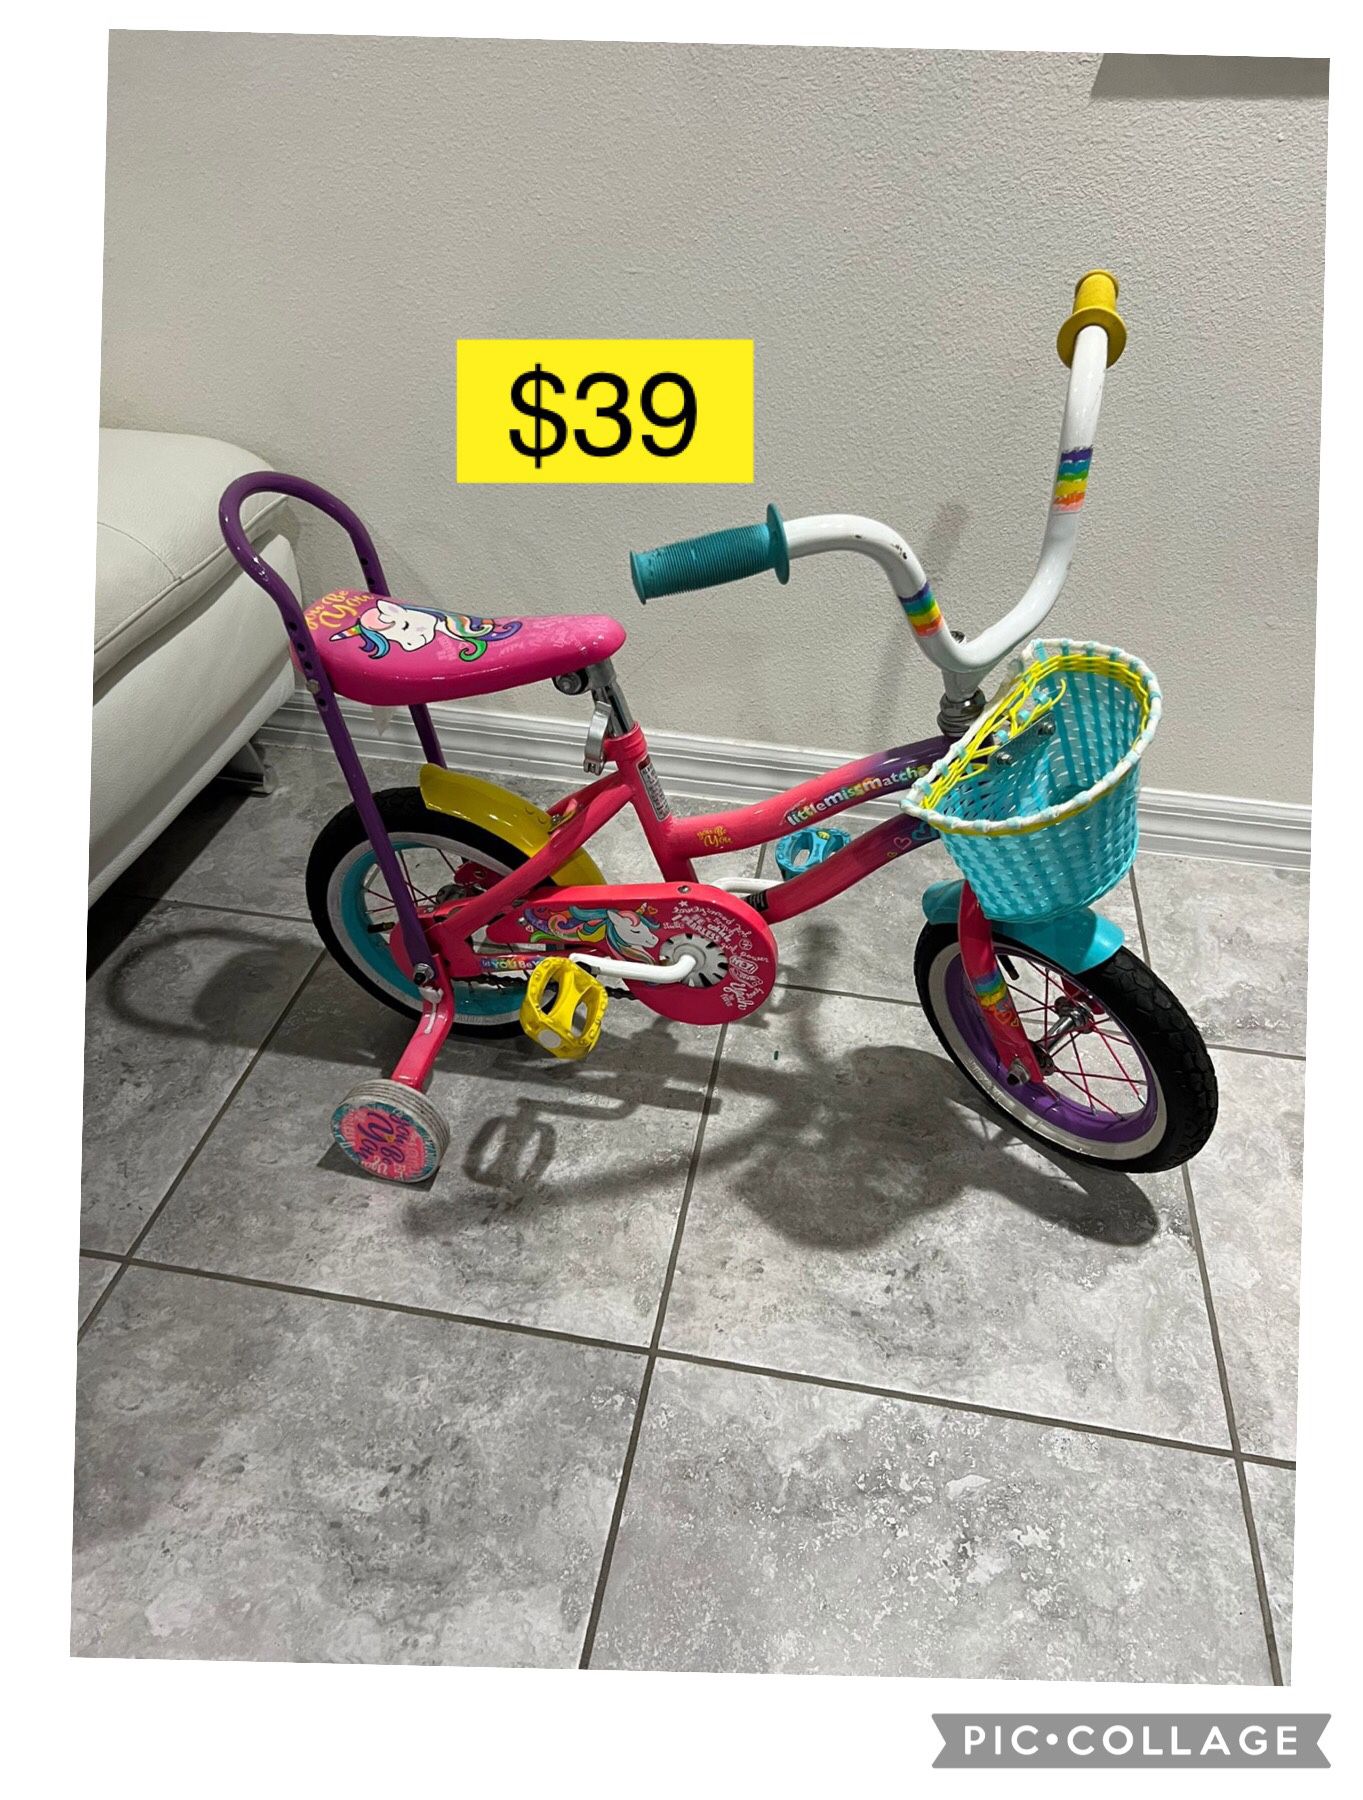 Kid girl bike with tranning wheels / Bicicleta niña con llantitas